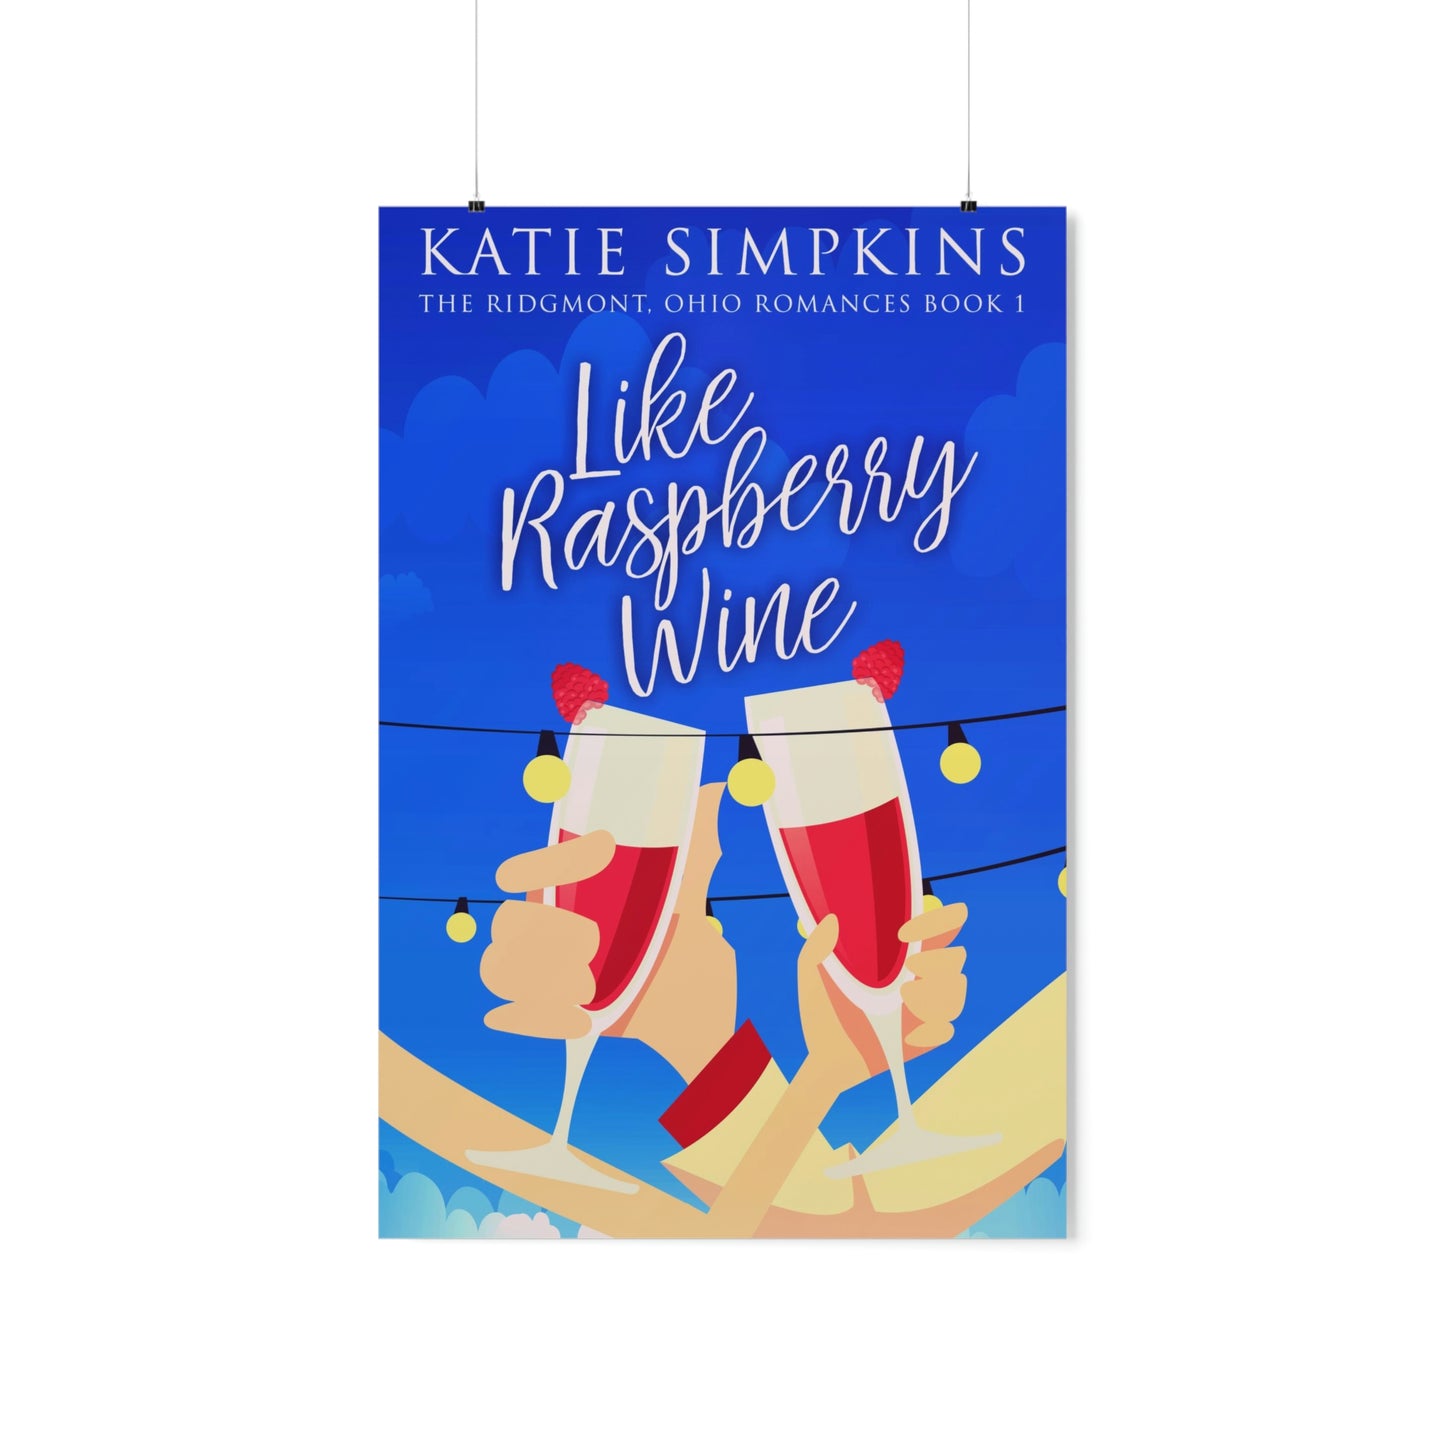 Like Raspberry Wine - Matte Poster